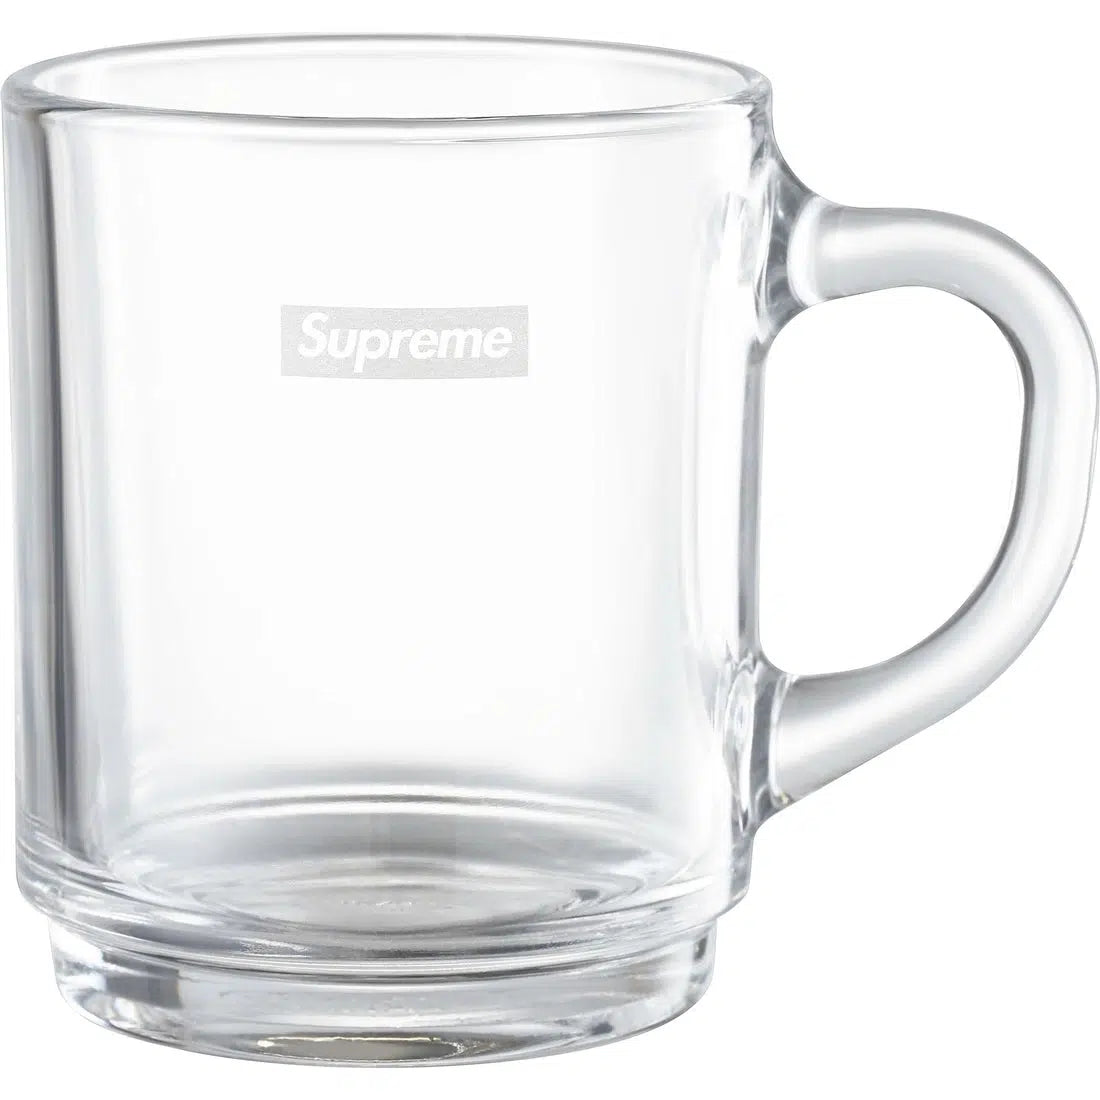 SUPREME®/DURALEX GLASS MUGS (SET OF 6) | Waves Never Die | Supreme | Accessories